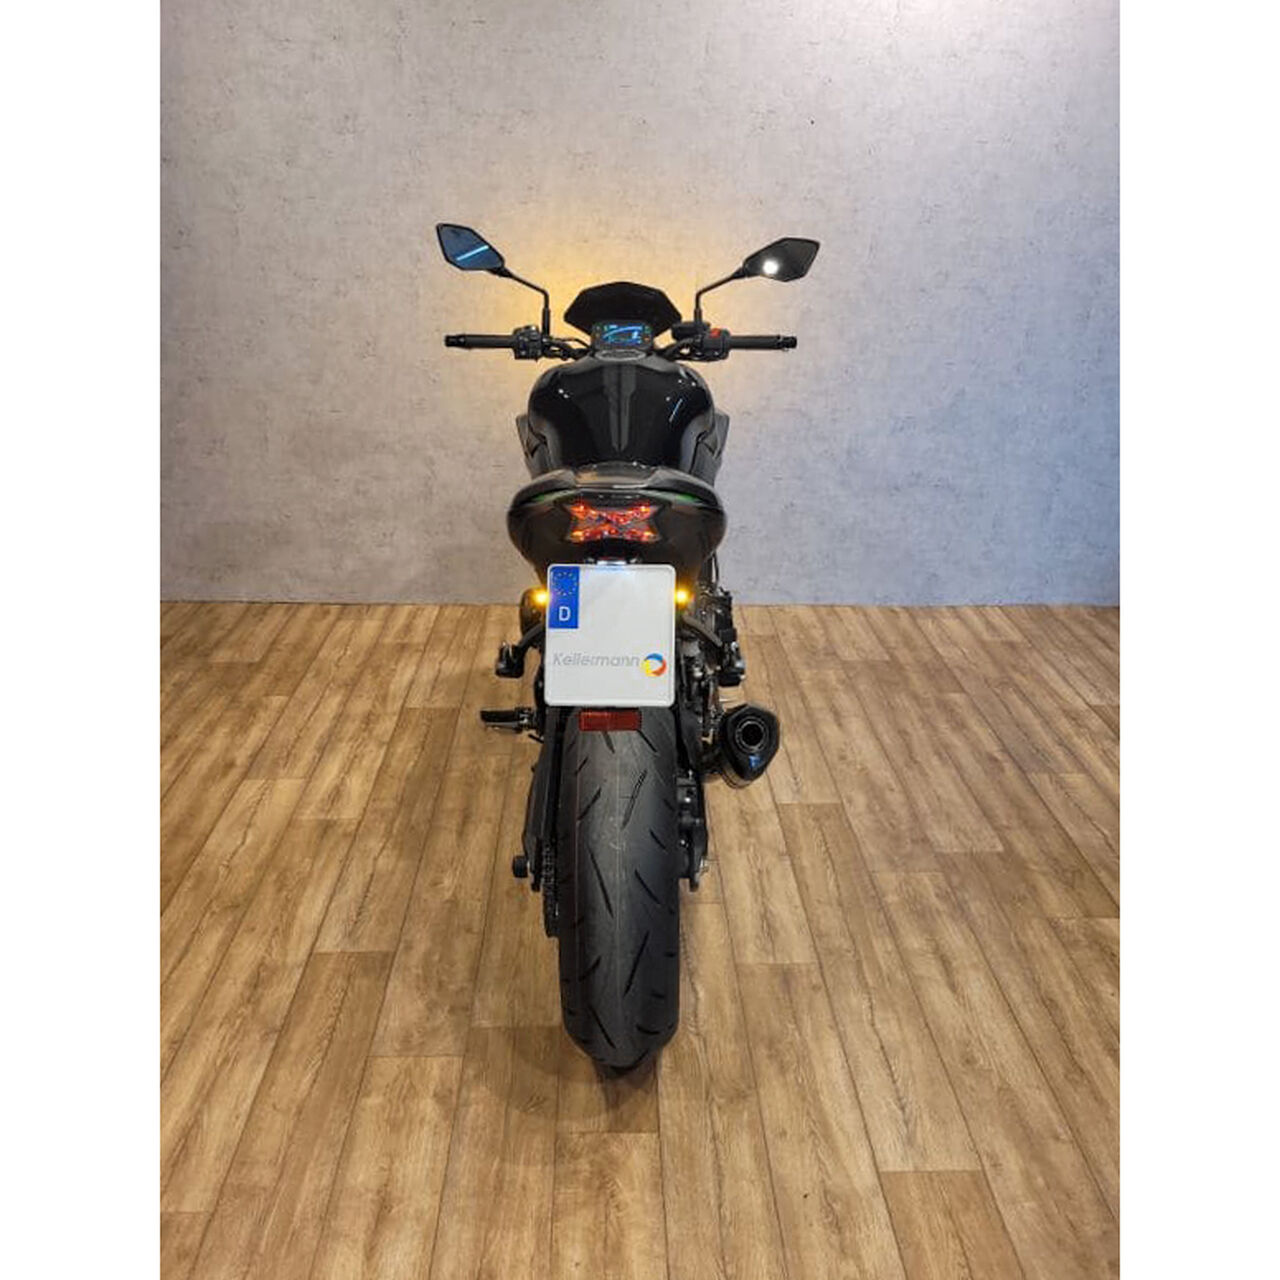 Kellermann LED Metall Blinker Atto® M5 schwarz, klarglas Neutral kaufen -  POLO Motorrad